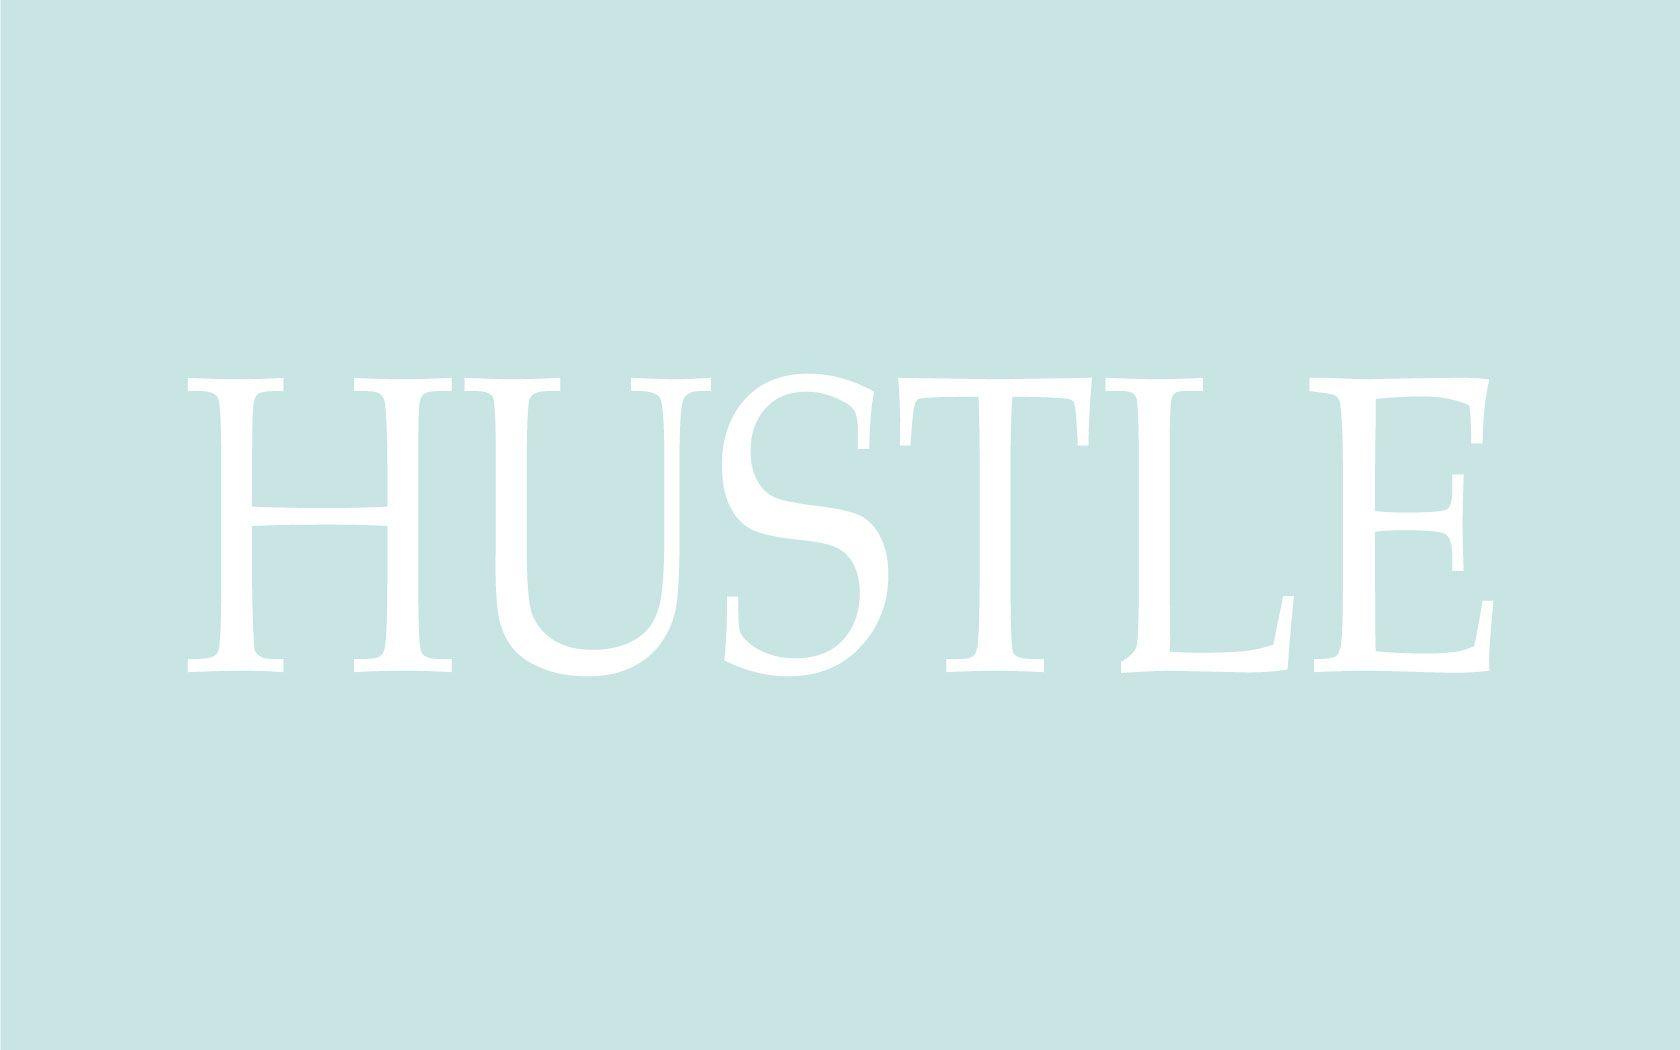 Hustle wallpaper. Mac wallpaper desktop, Homescreen